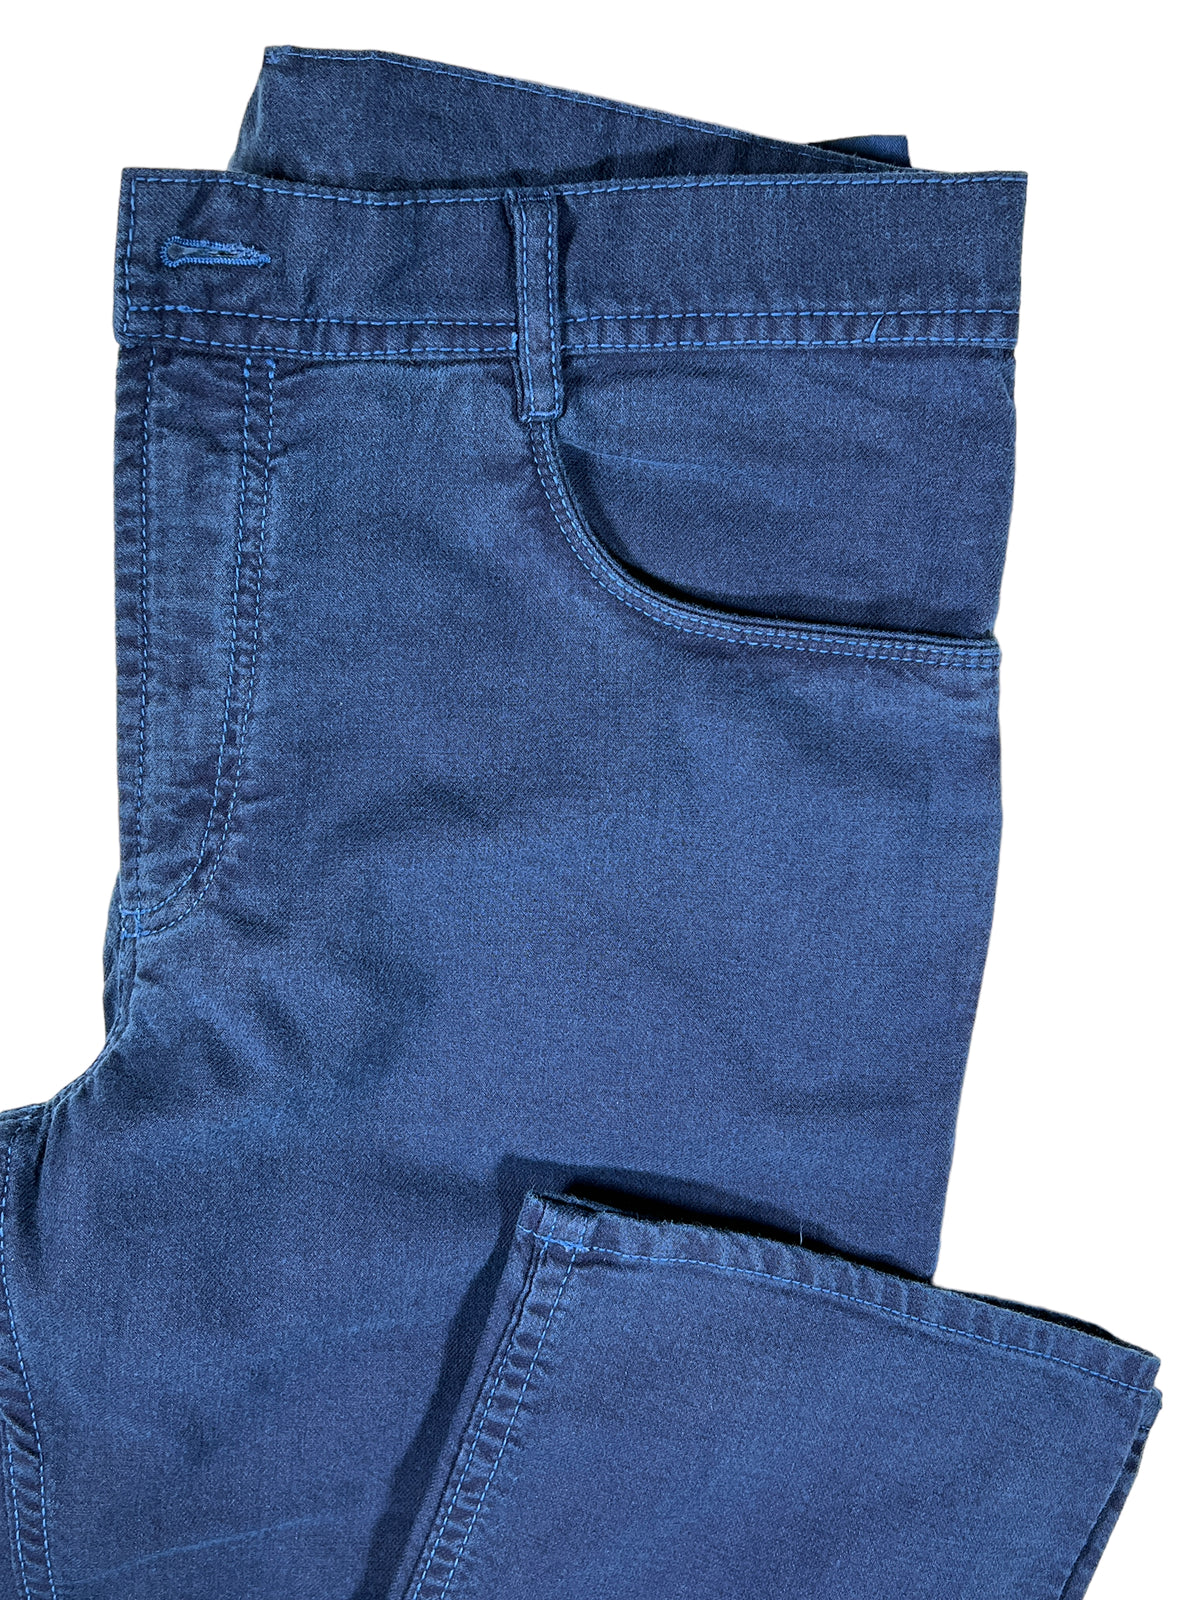 OARS & OLD IVY MEN'S DESERT COTTON STRETCH PANTS - DEEP BLUE